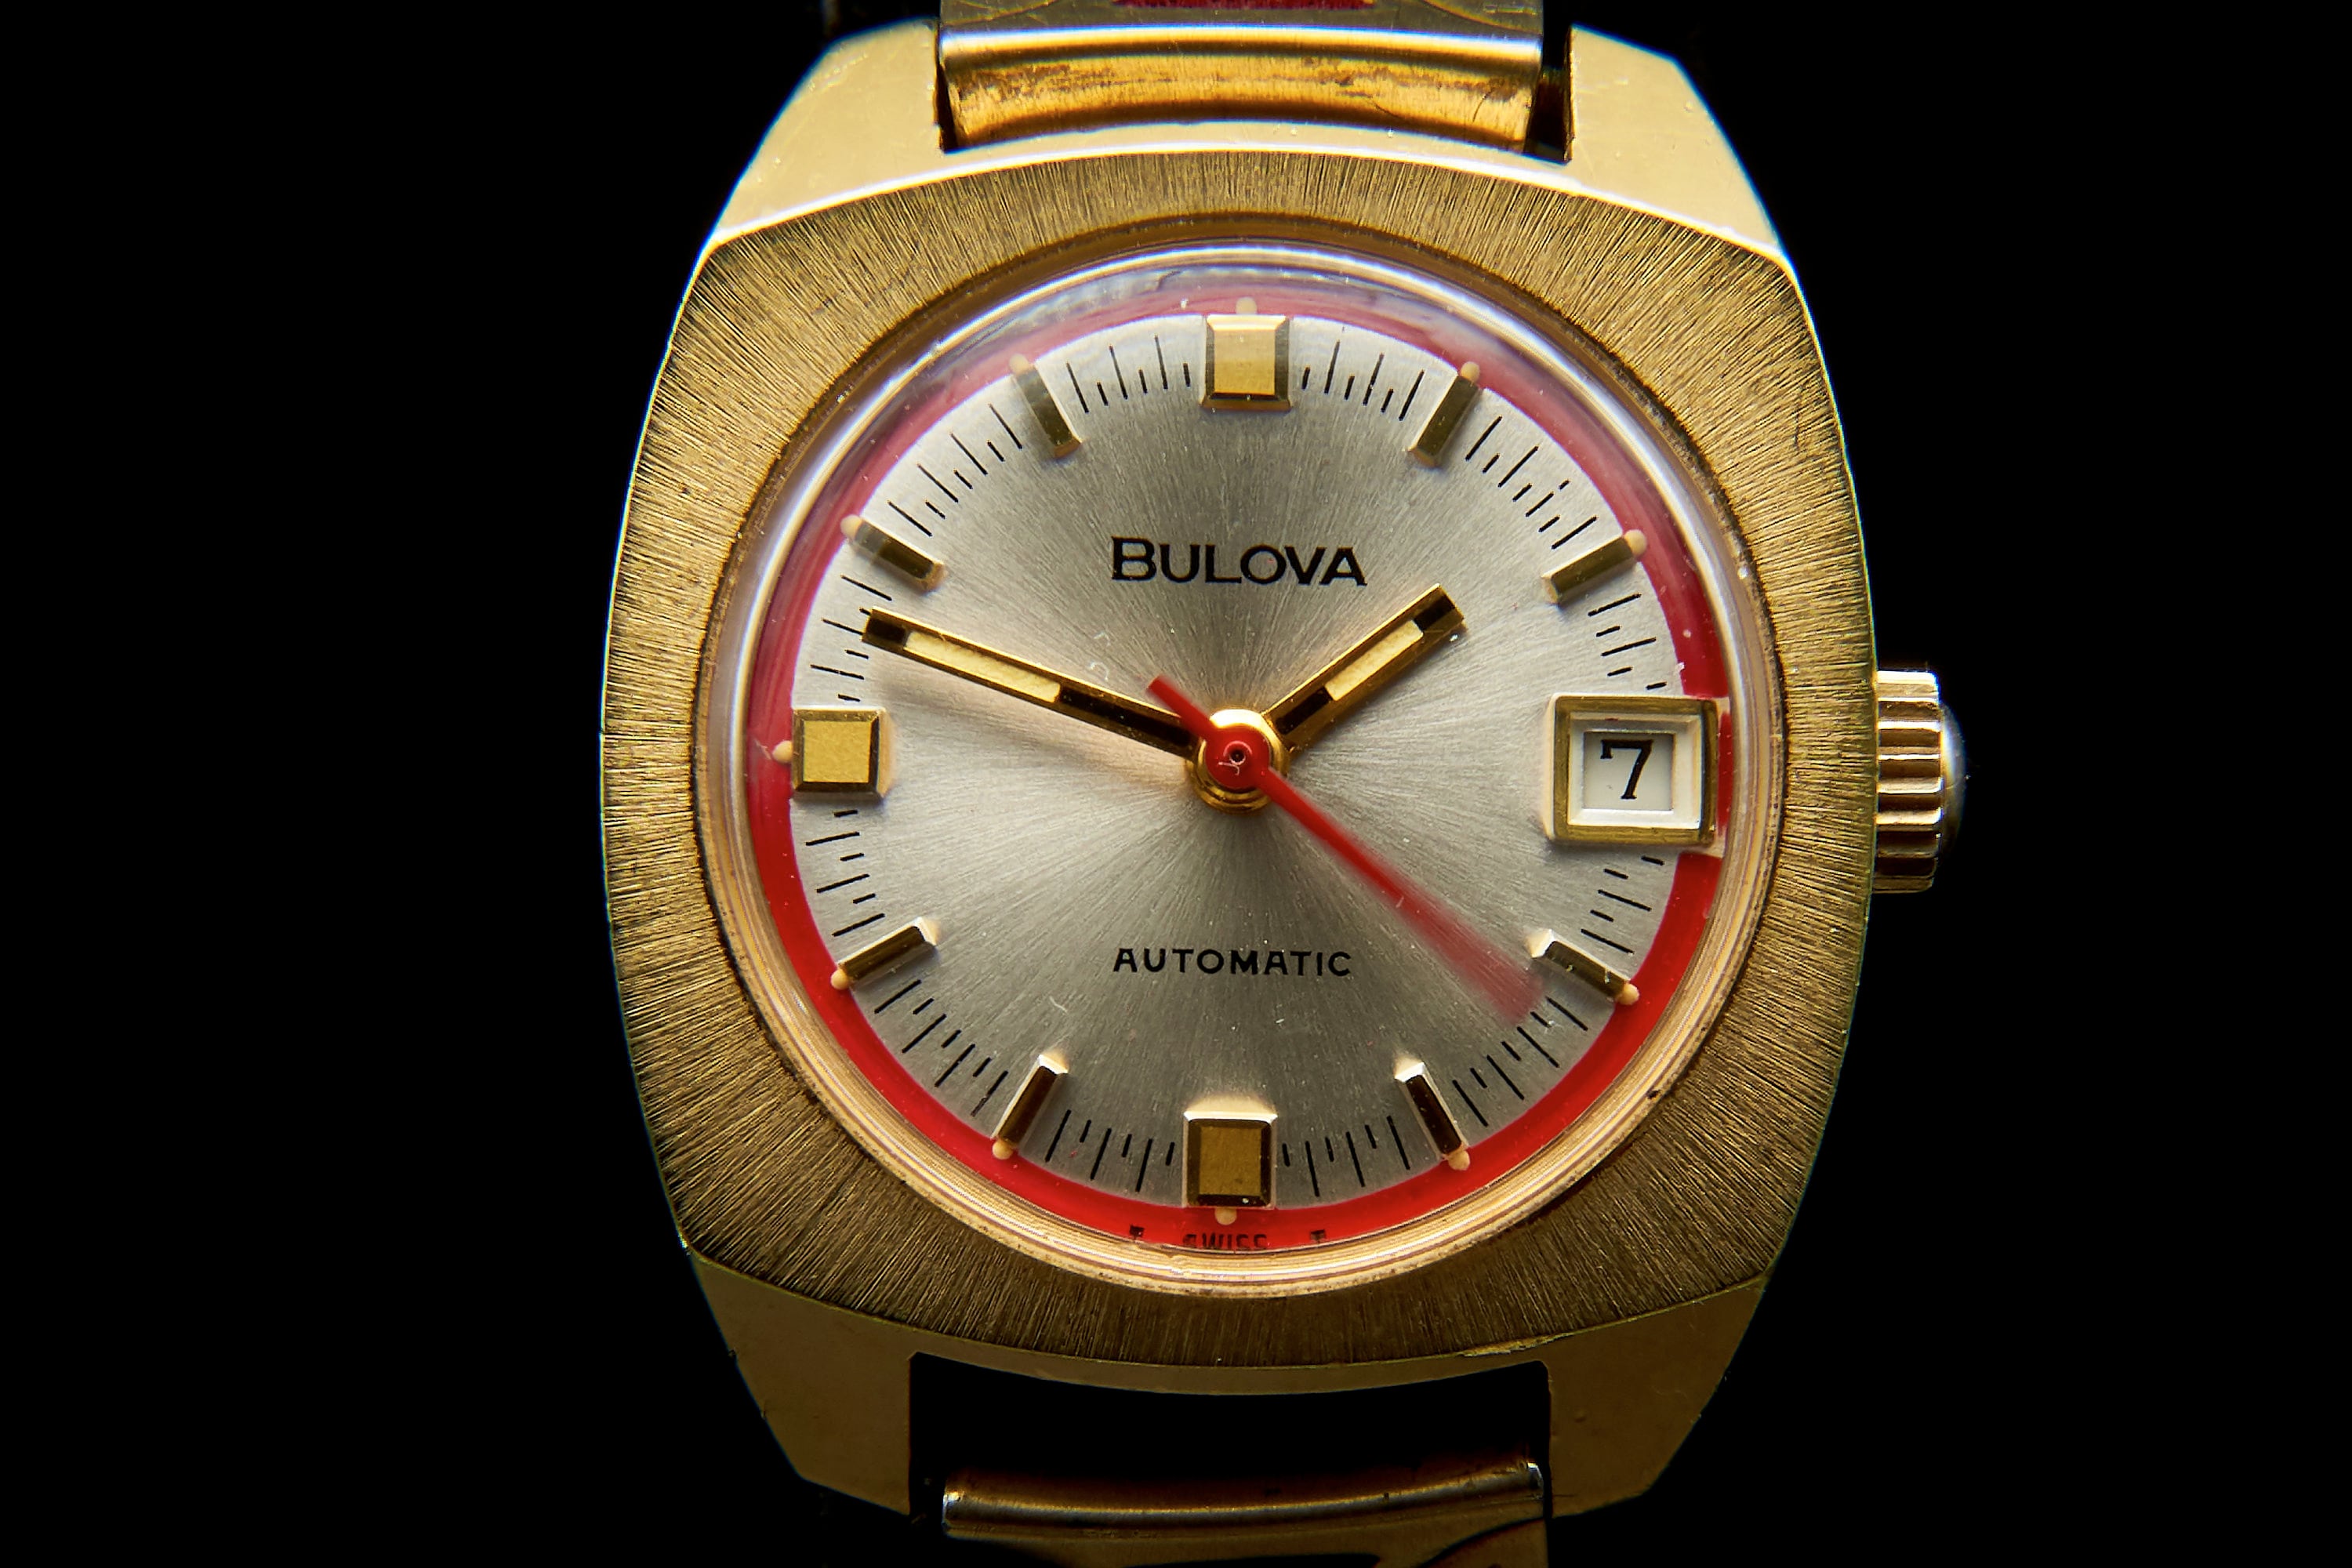 Vintage bulova watch serial number lookup - maztank